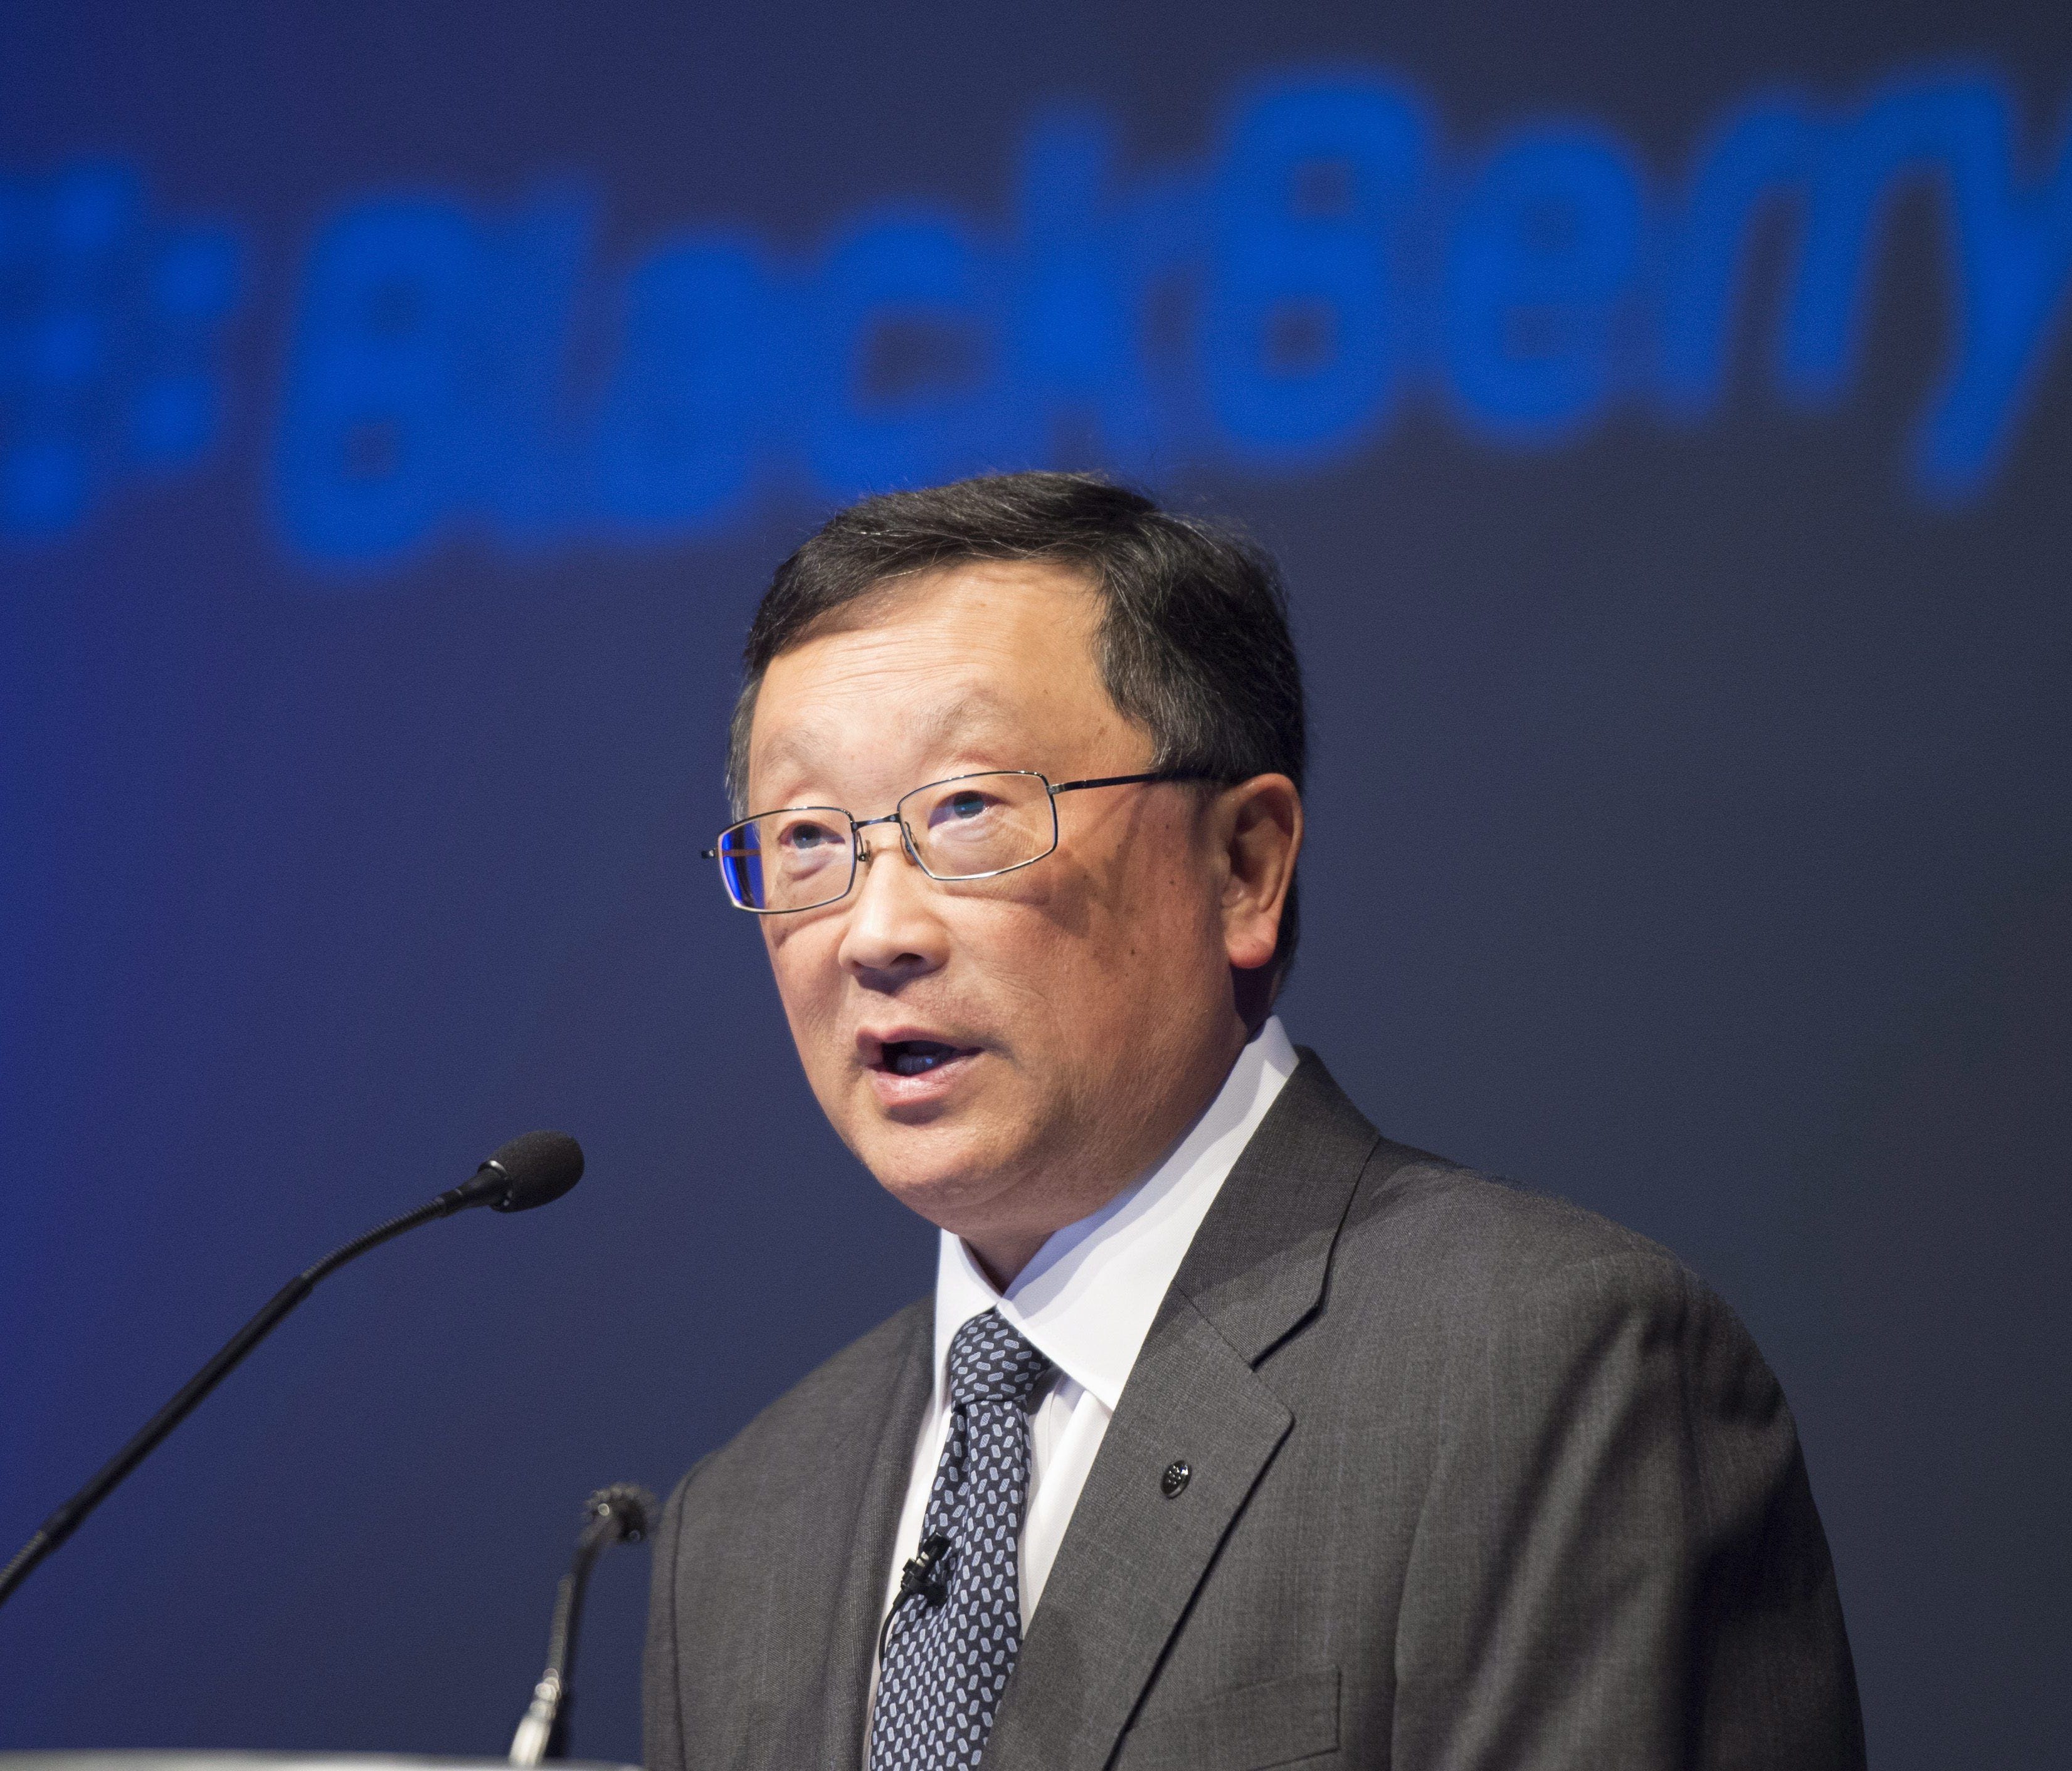 BlackBerry CEO John Chen speaks at the BlackBerry Ltd. annual meeting in Waterloo, Ontario on June 23, 2015.